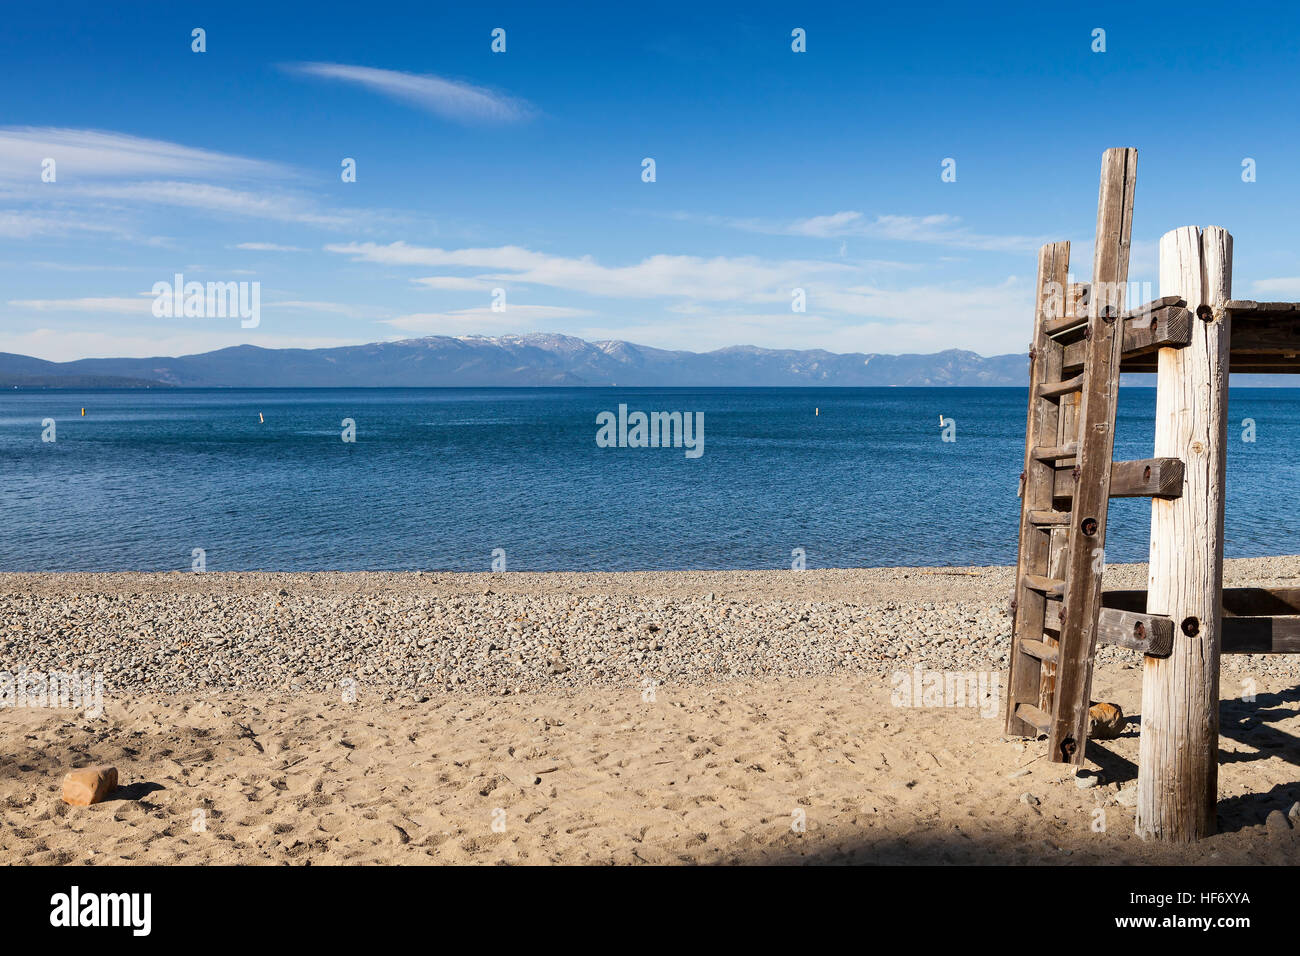 Lake Tahoe California Beach with Life Guard platform and ladder. Stock Photo